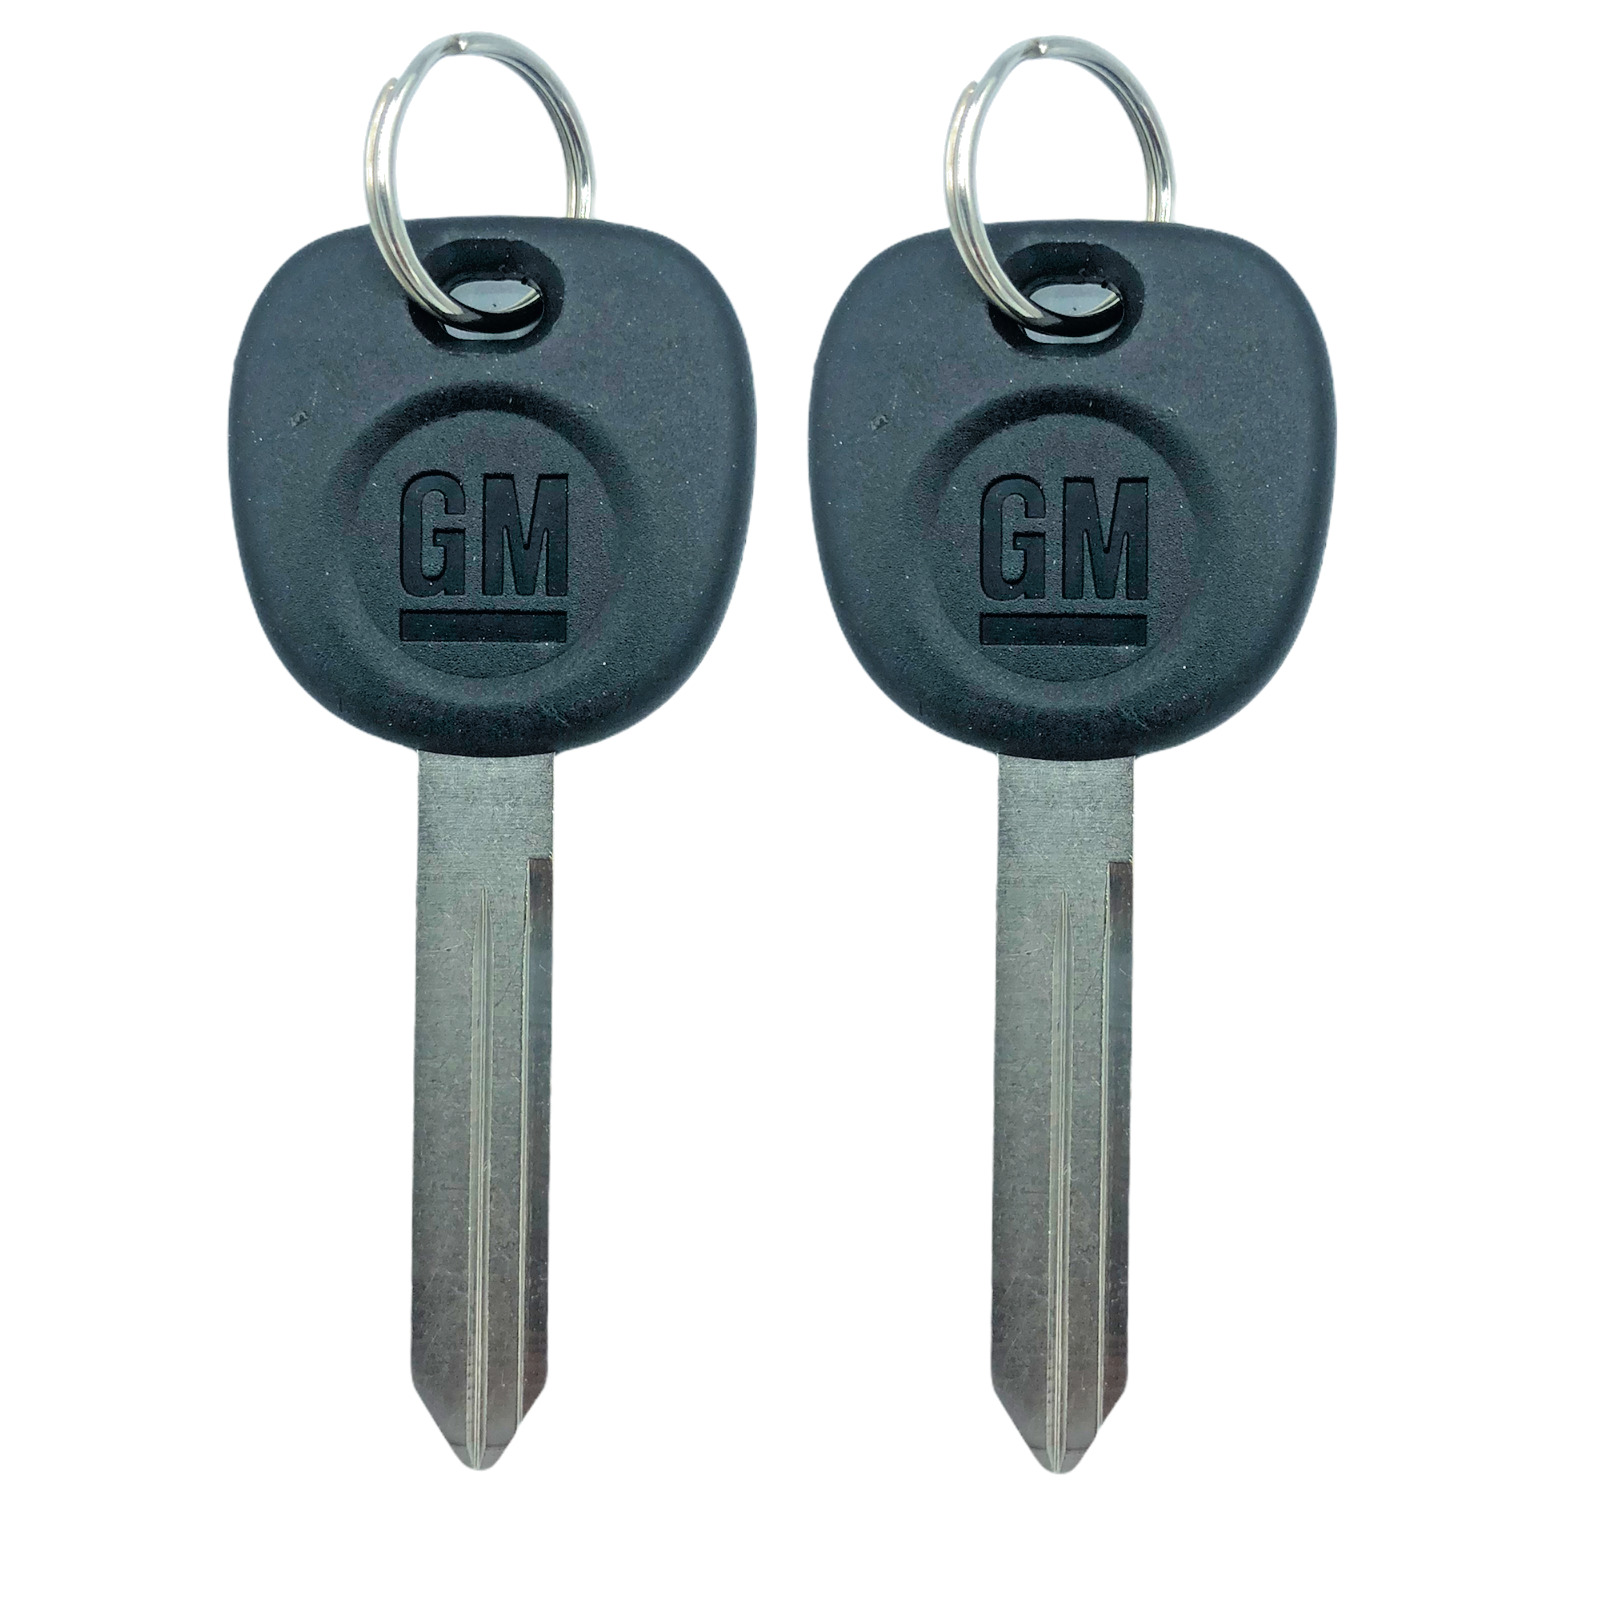 2 New OEM Ignition Logo Key Uncut Blade Blank For GM Chevy Truck Van B102-P